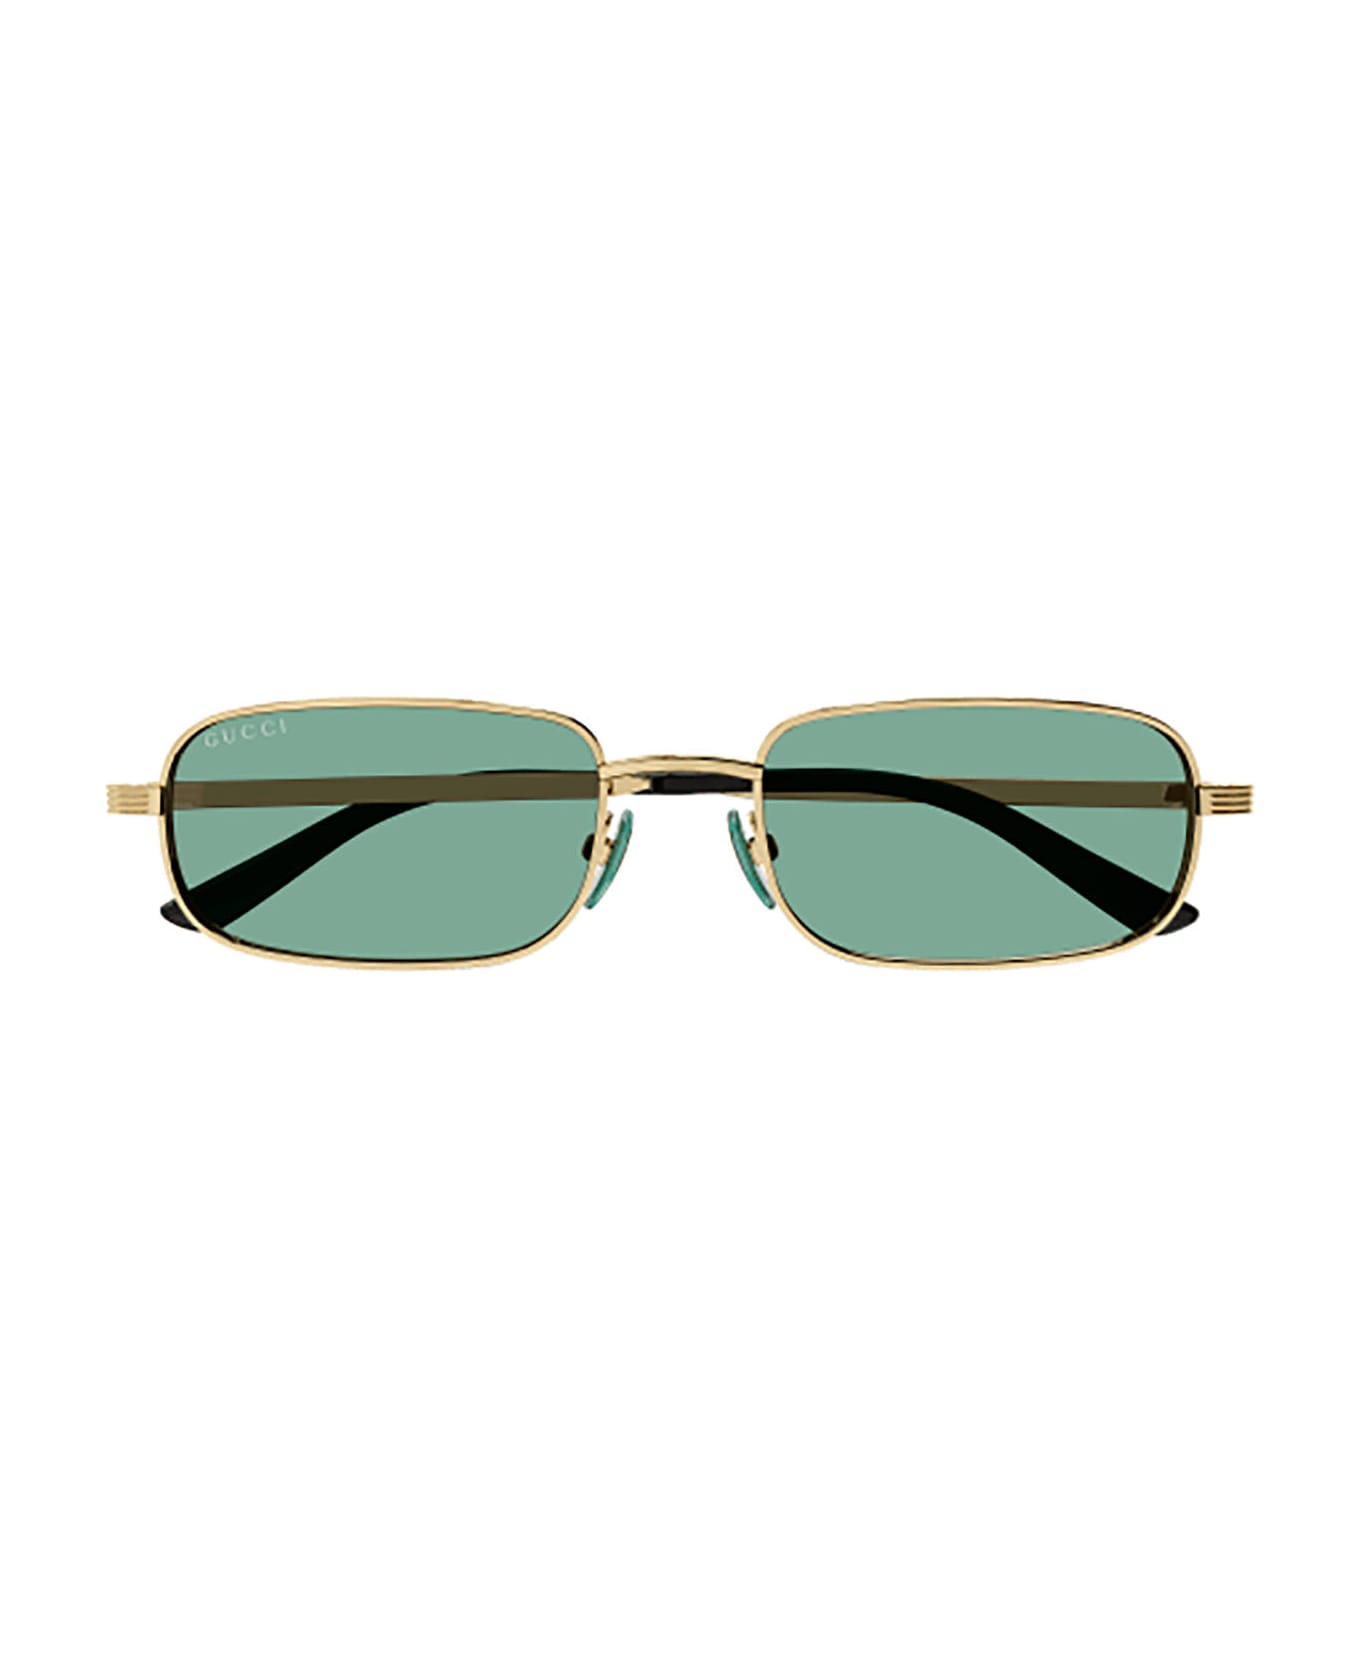 Gucci Eyewear GG1457S Sunglasses - Gold Gold Green